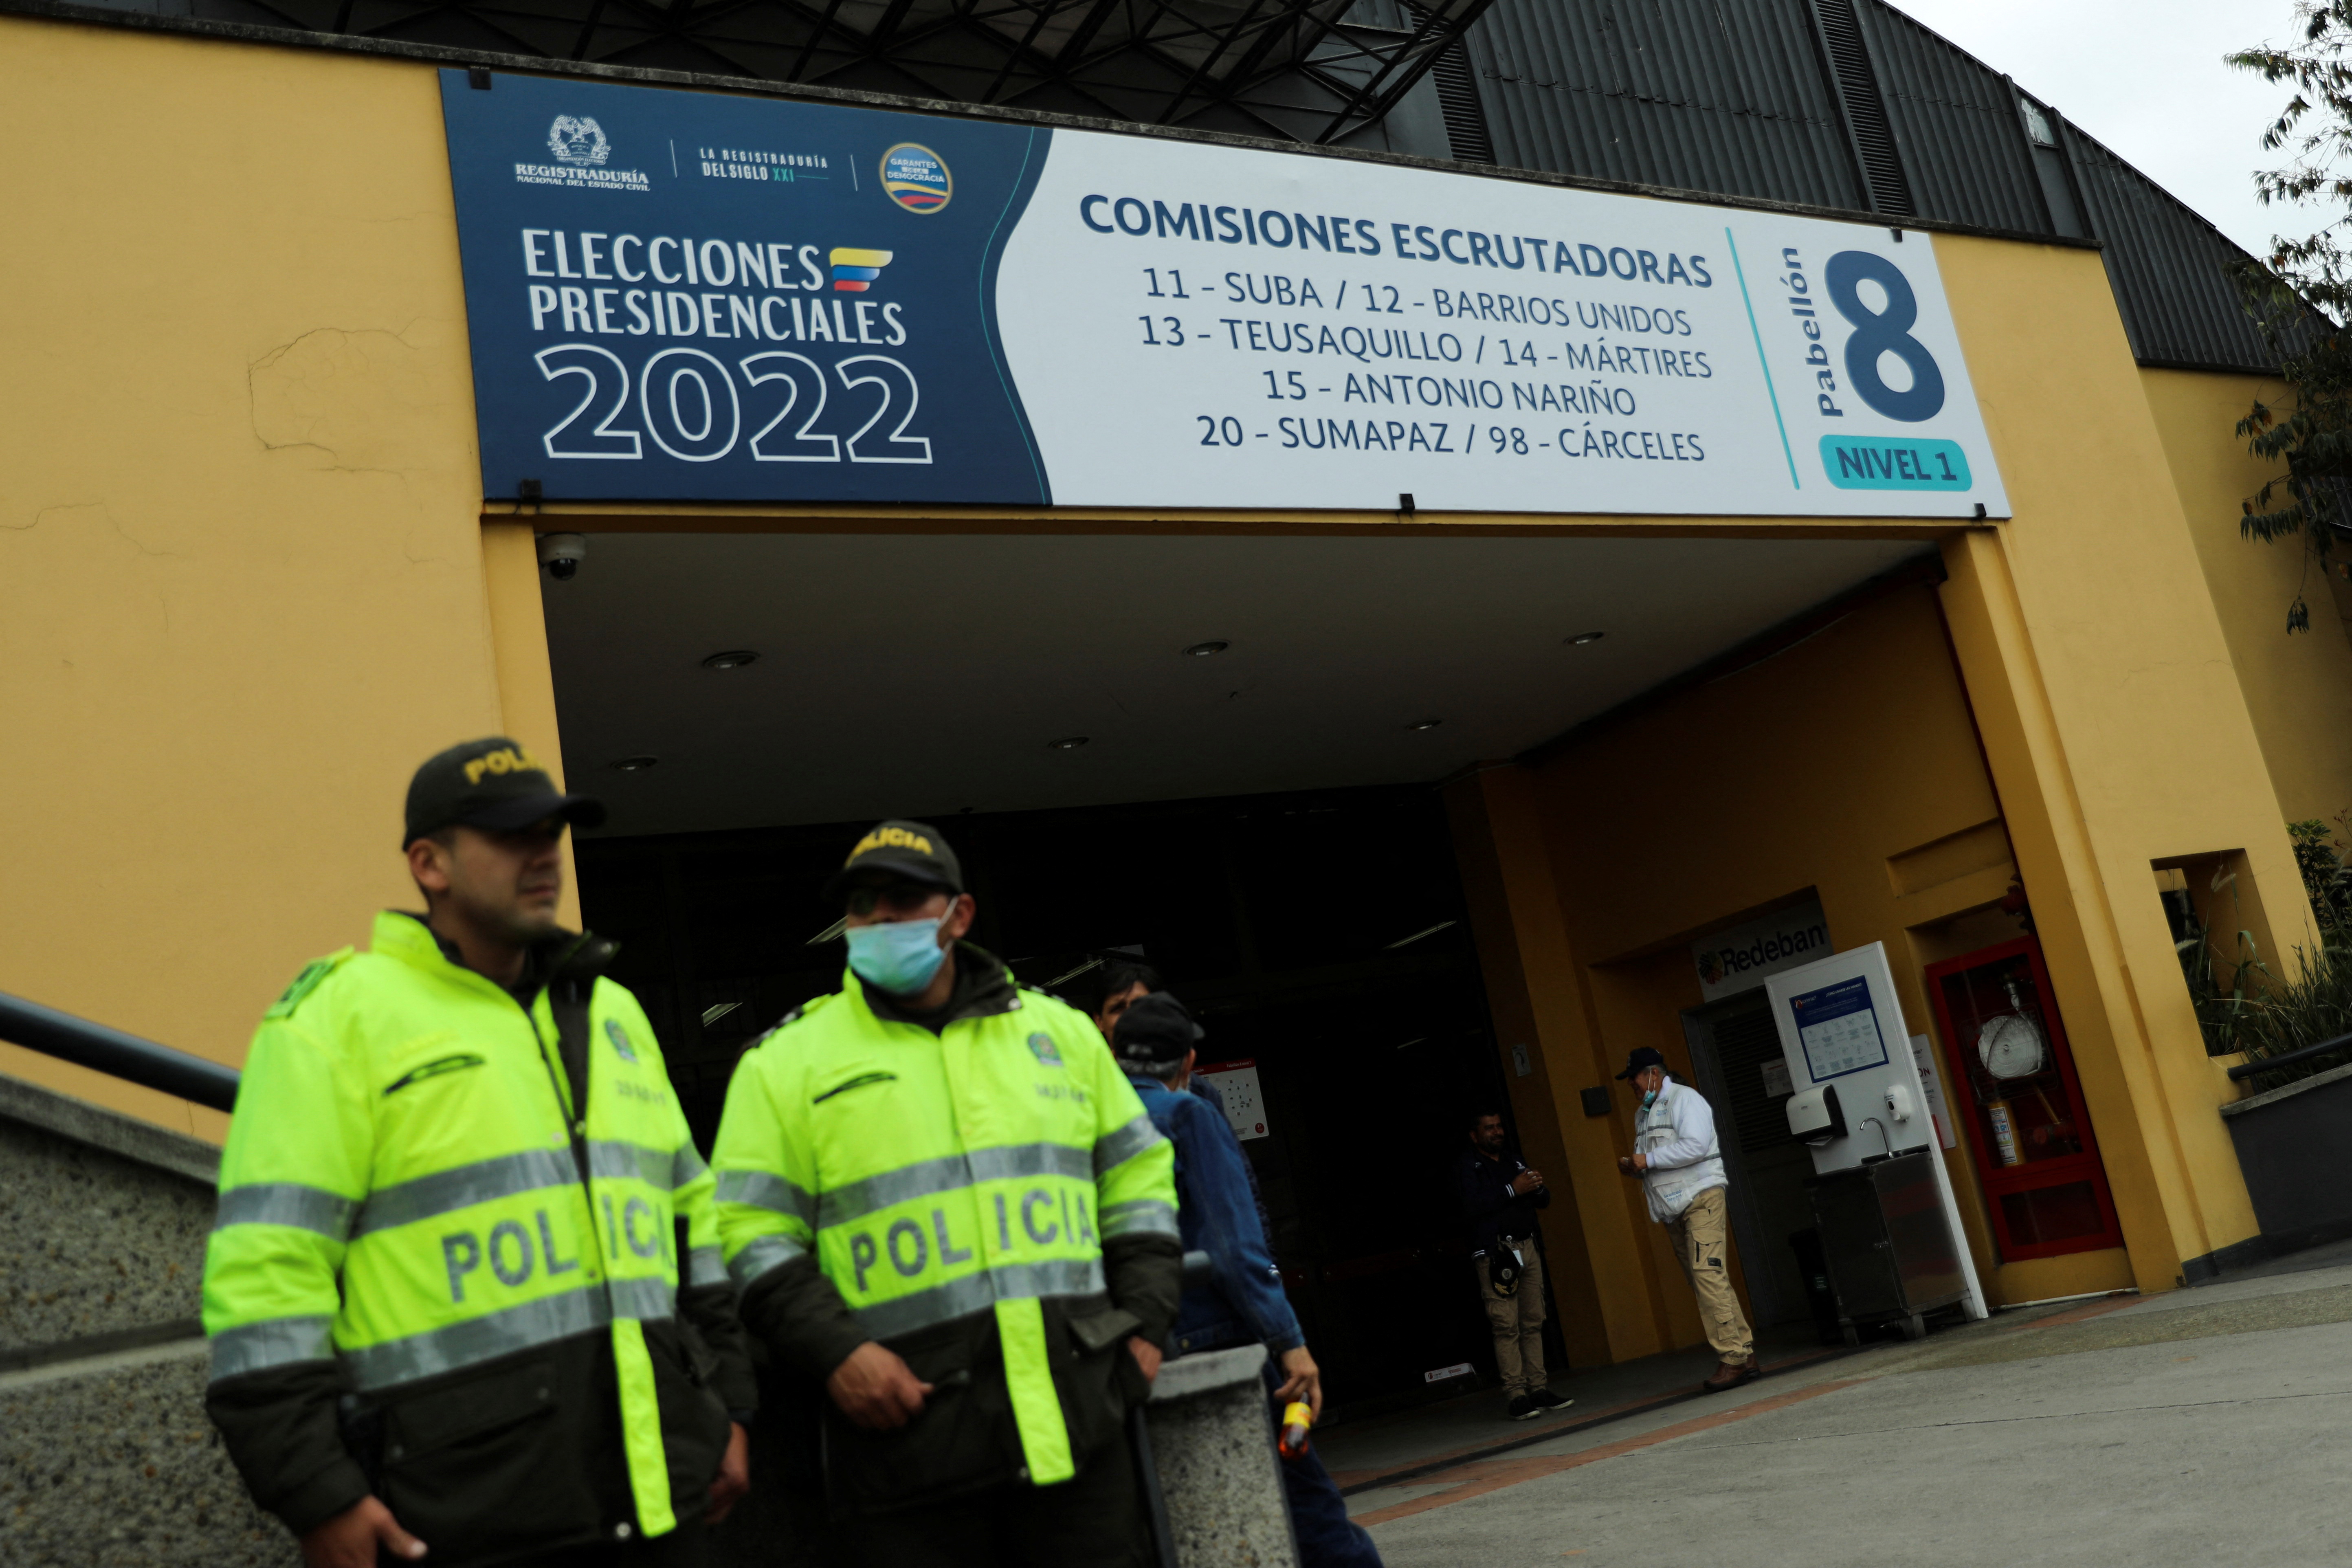 Preparations  prior to the presidential election in Bogota